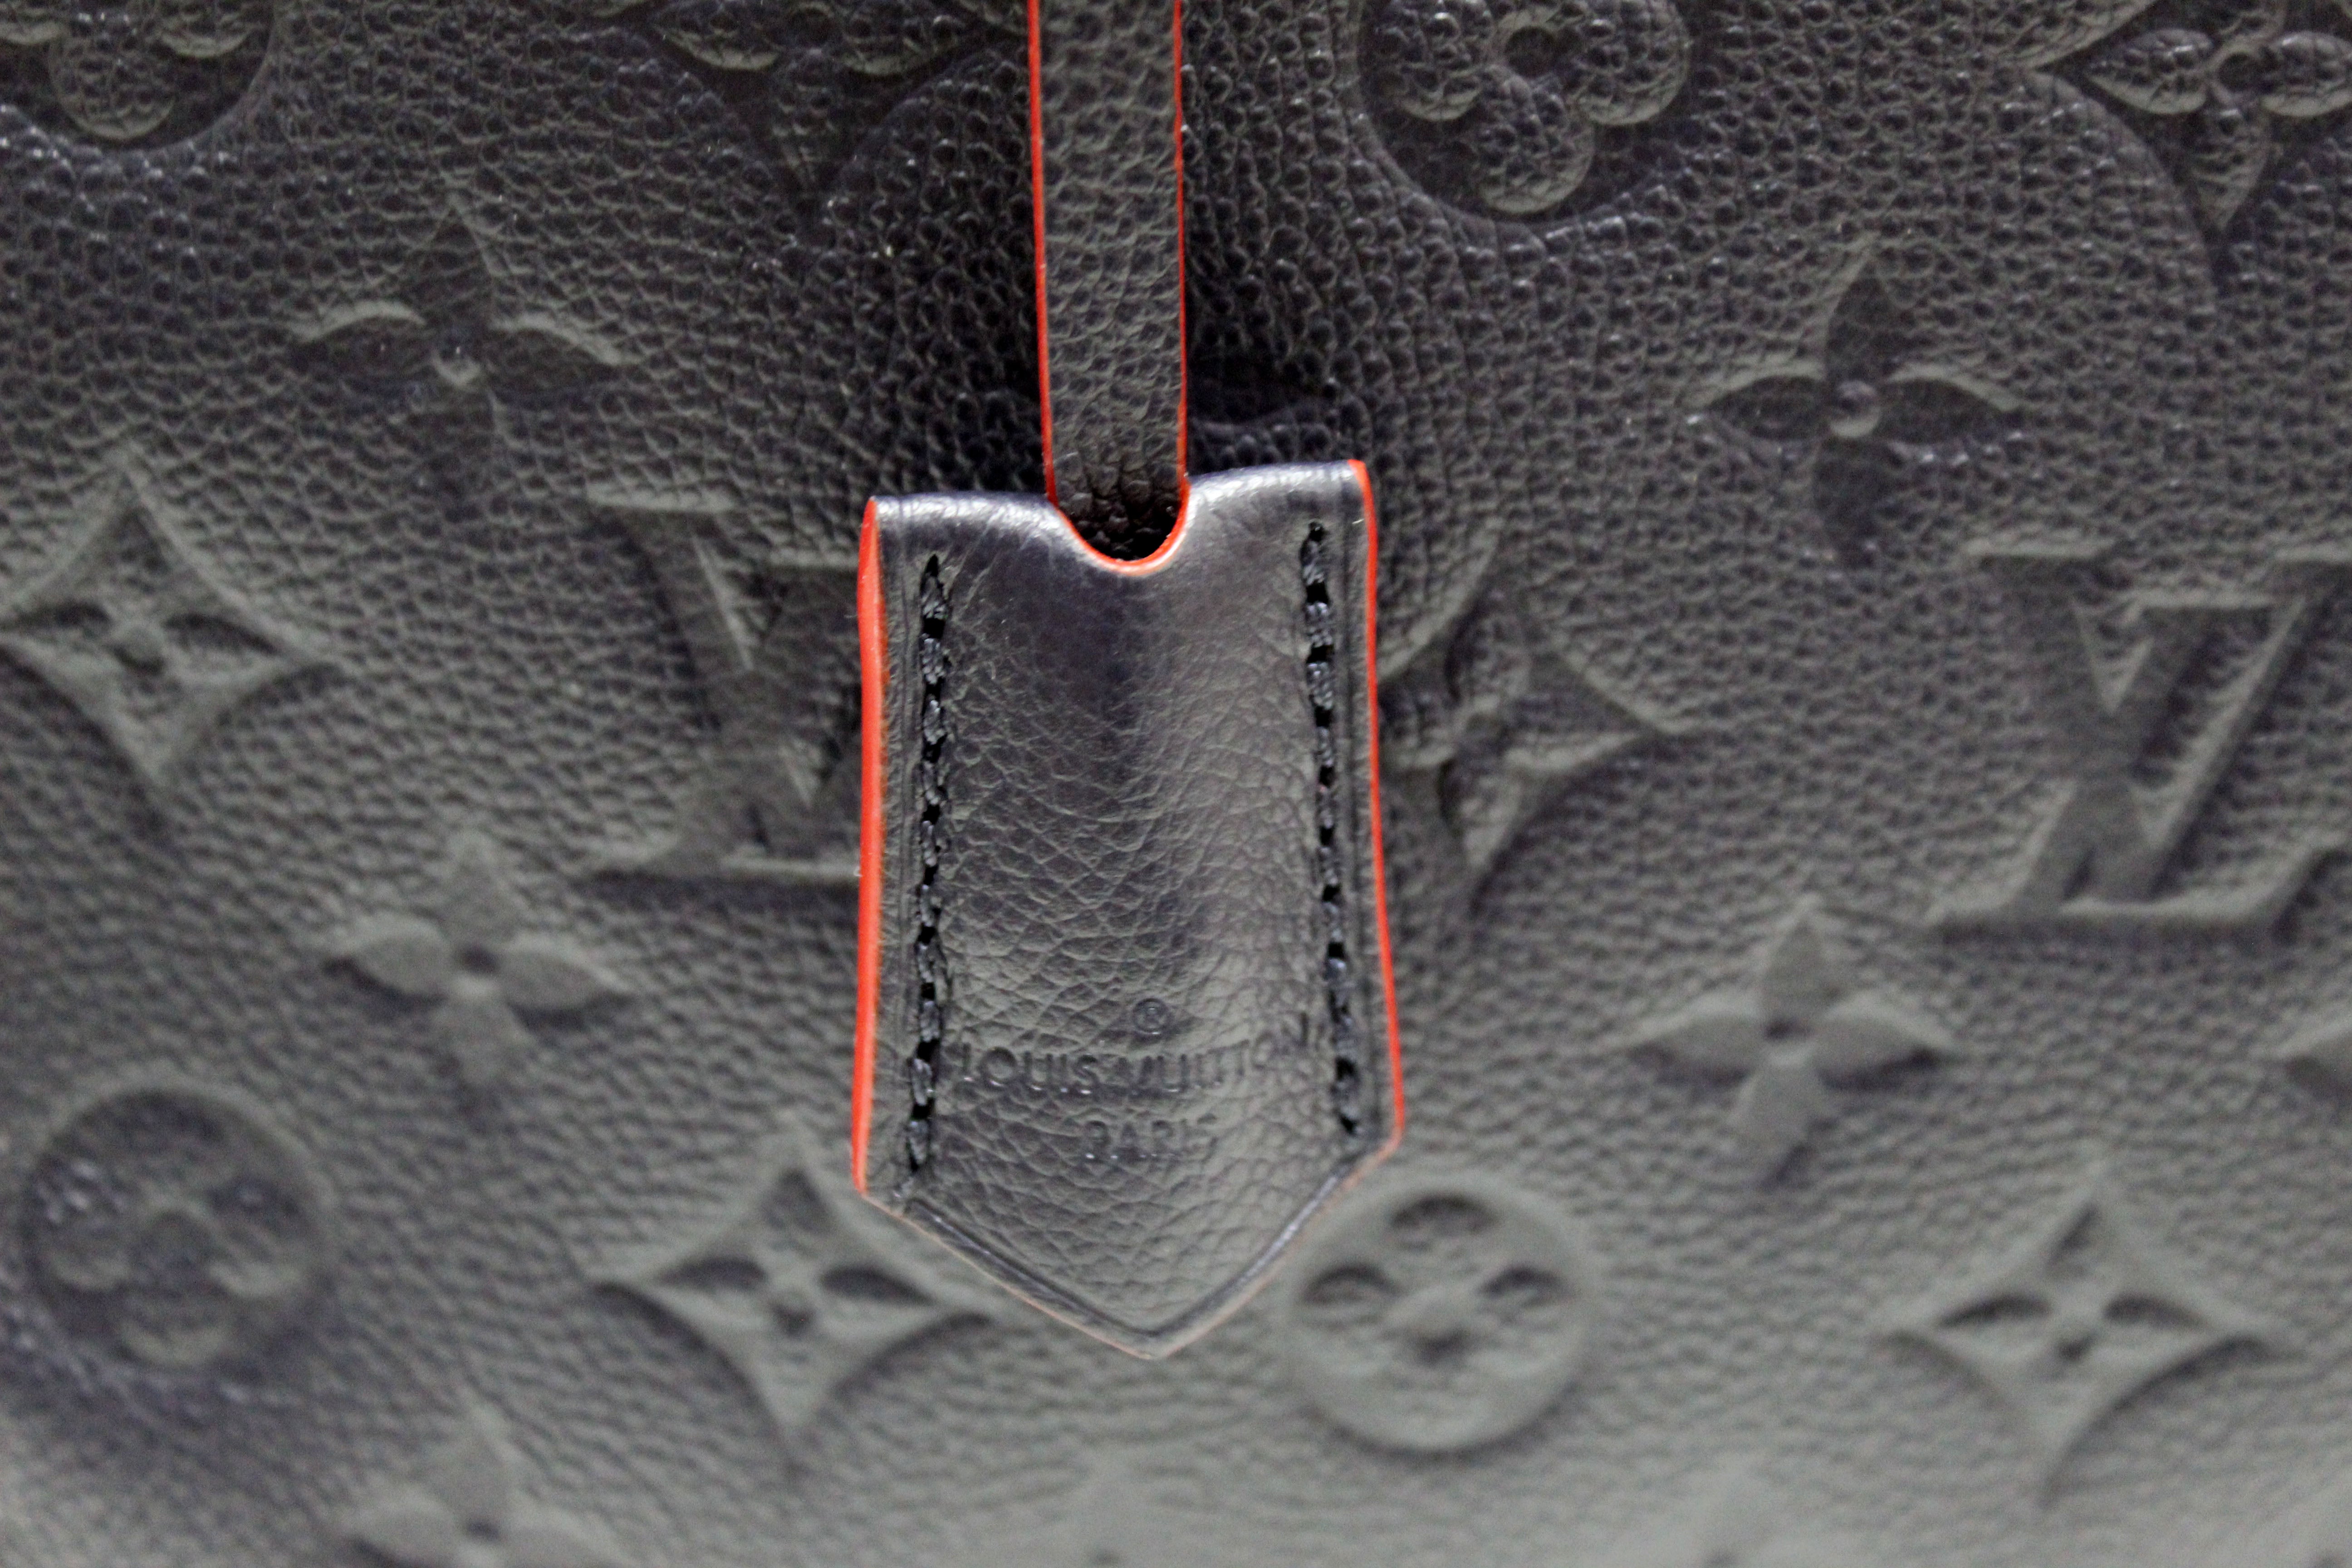 Montaigne leather handbag Louis Vuitton Blue in Leather - 35505765